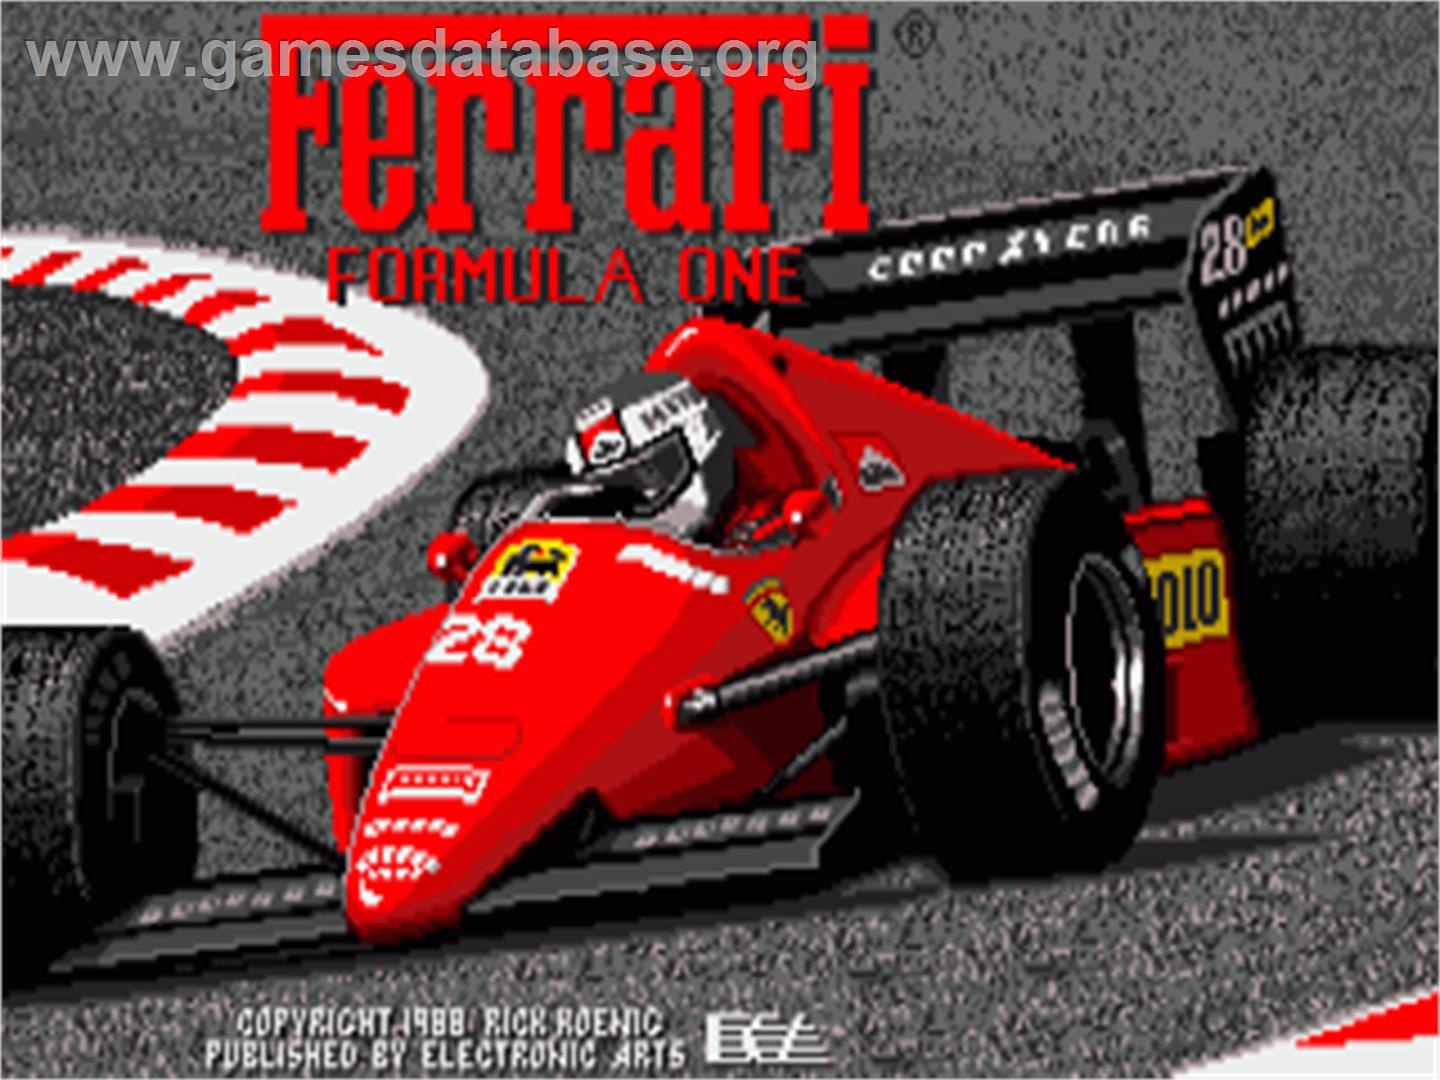 Ferrari Formula One - Commodore Amiga - Artwork - Title Screen